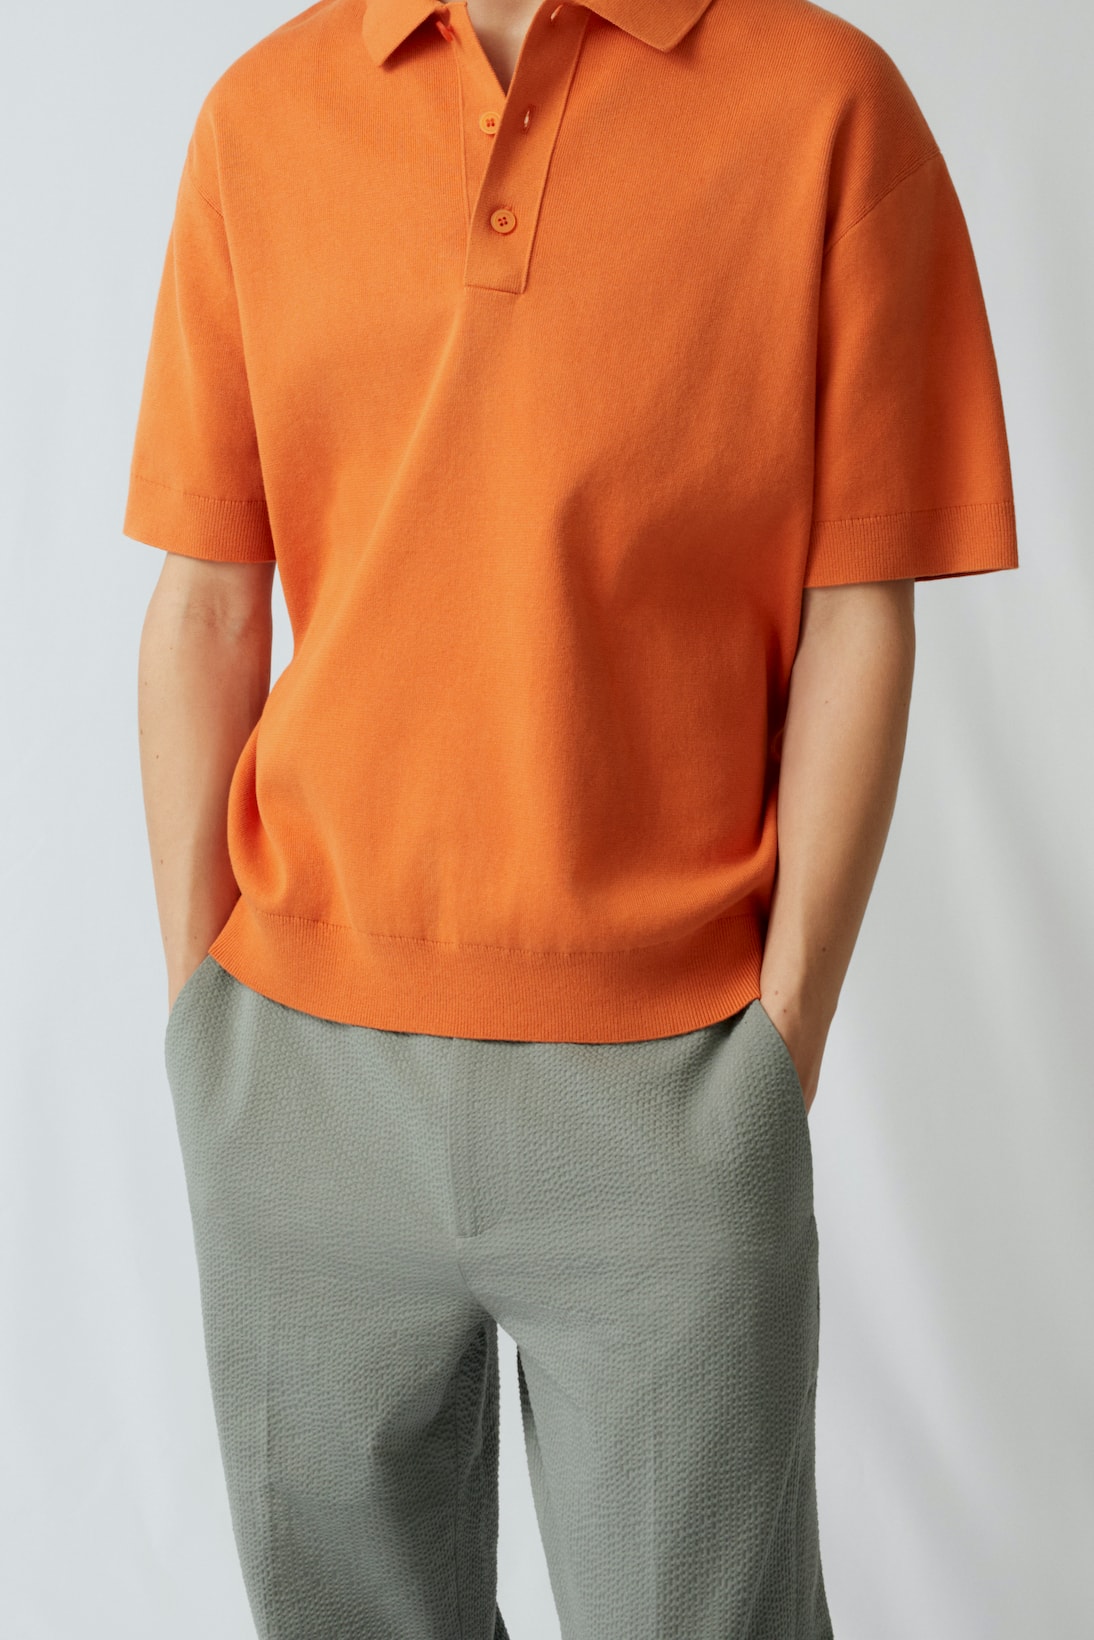 cos spring menswear summer collection lookbook orange collar t shirt gray pants